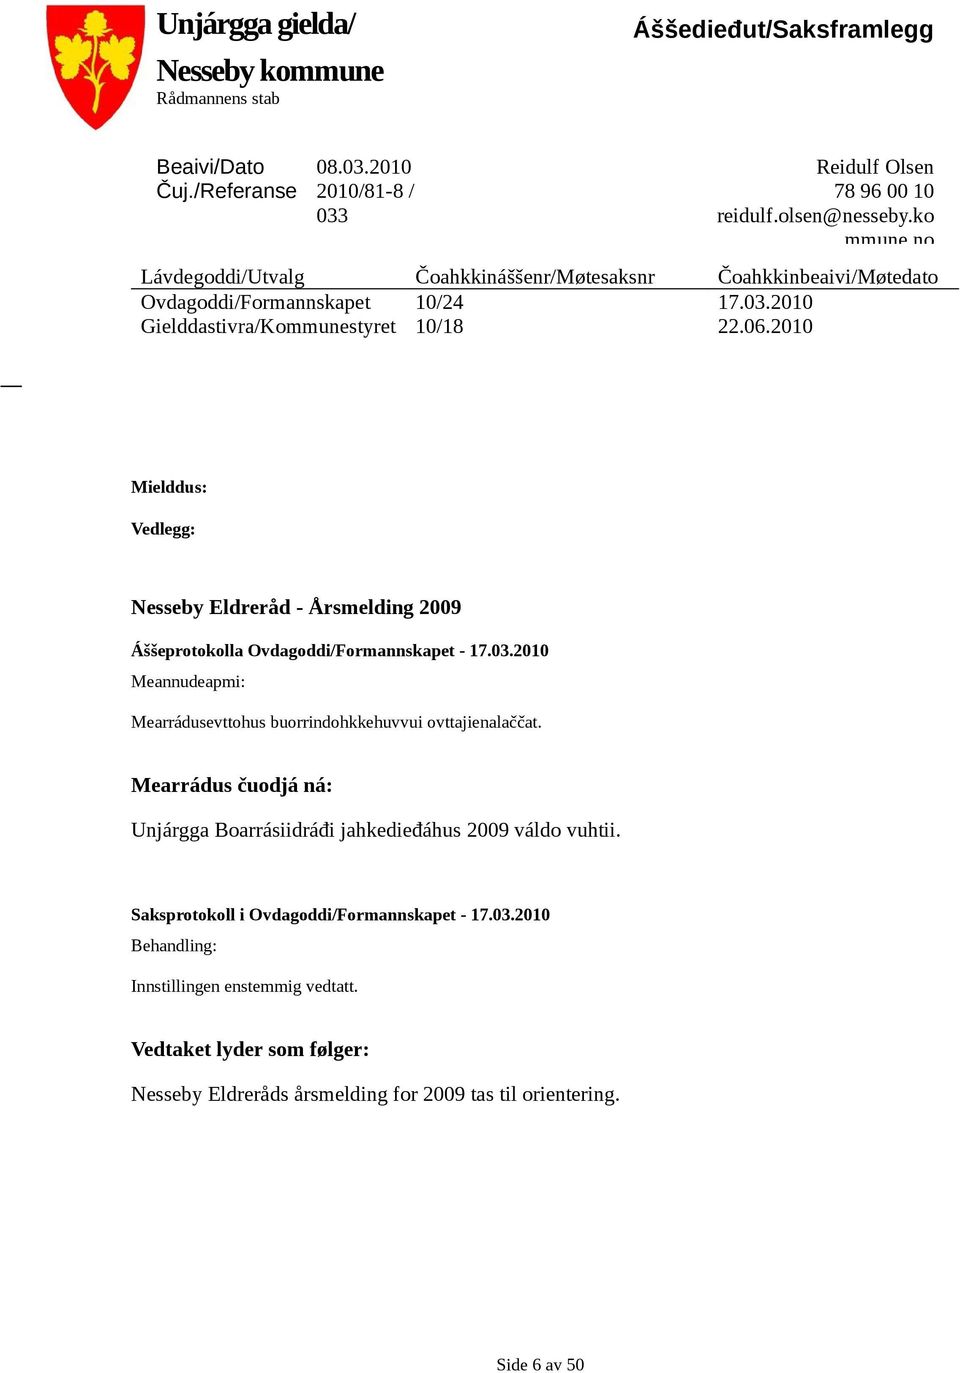 2010 Mielddus: Vedlegg: Nesseby Eldreråd - Årsmelding 2009 Áššeprotokolla Ovdagoddi/Formannskapet - 17.03.2010 Meannudeapmi: Mearrádusevttohus buorrindohkkehuvvui ovttajienalaččat.